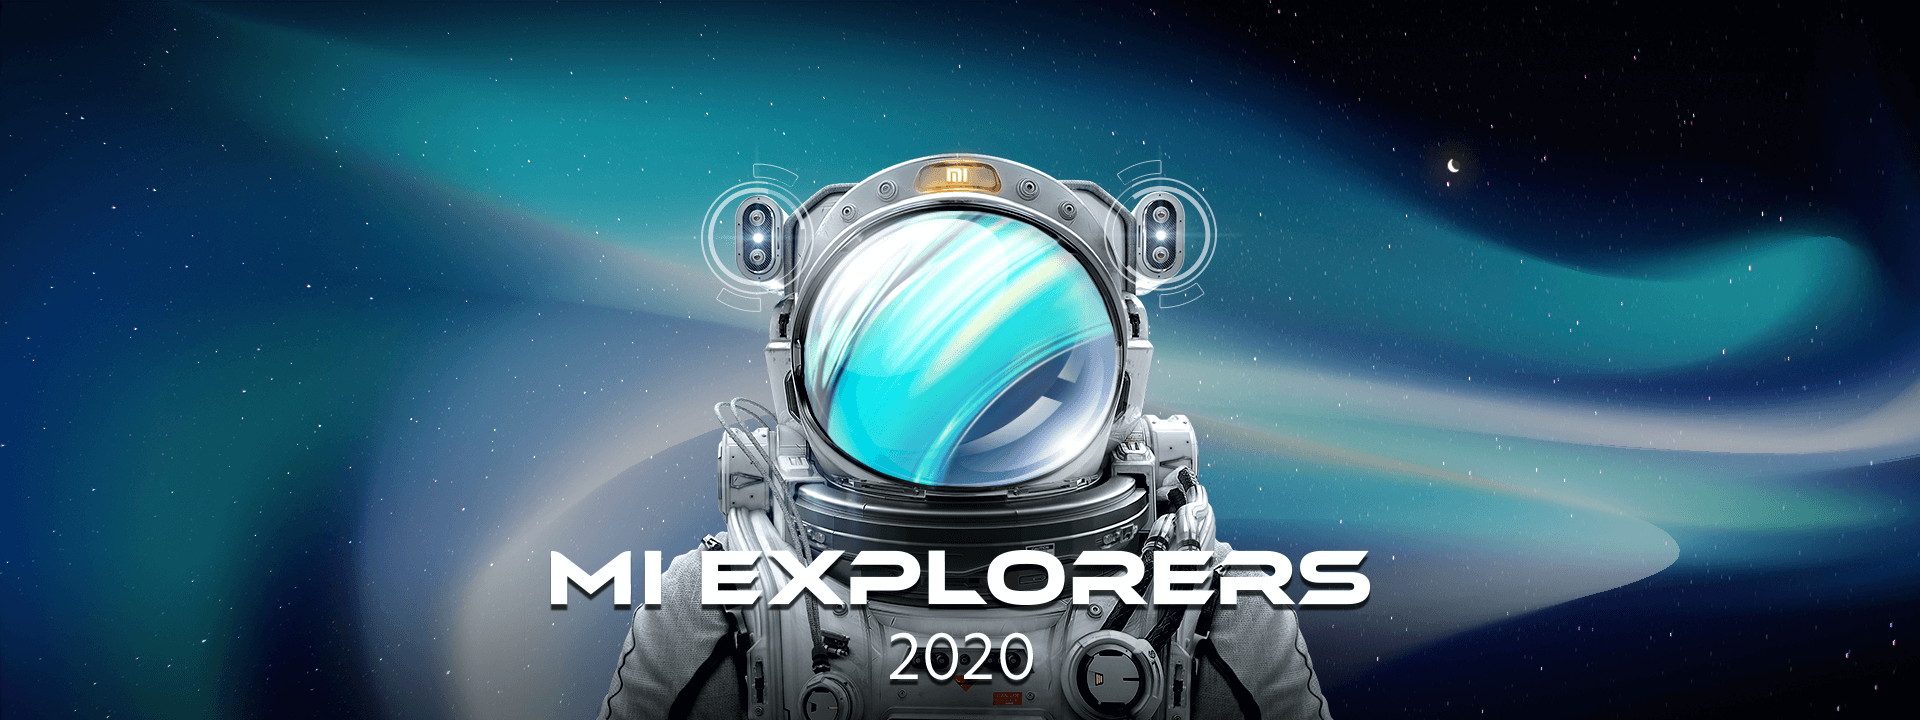 Mi Explorers 2020 